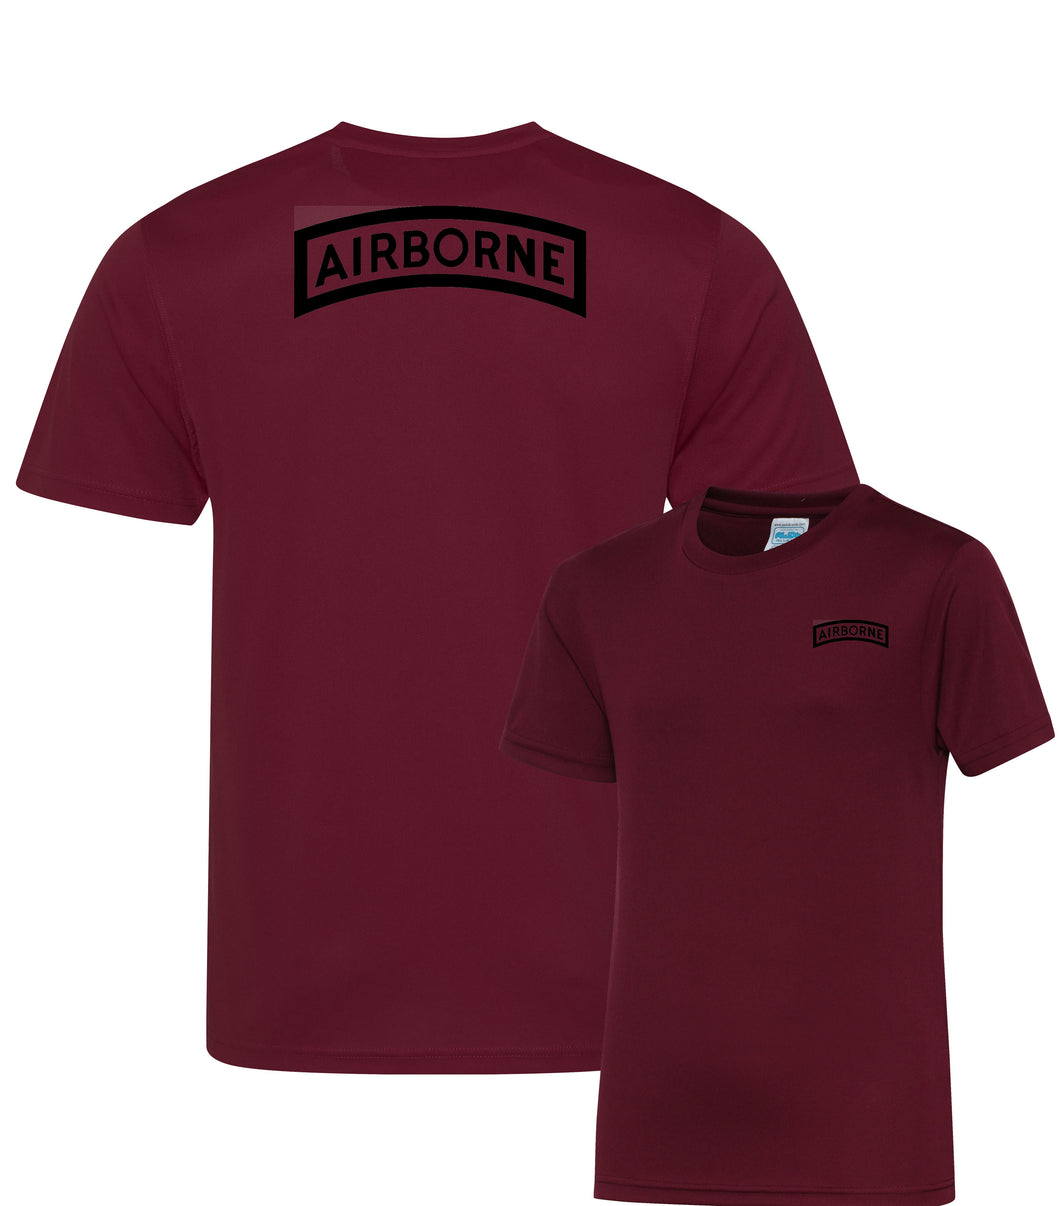 Airborne Tab / Rocker - Fully Printed Wicking Fabric T-shirt